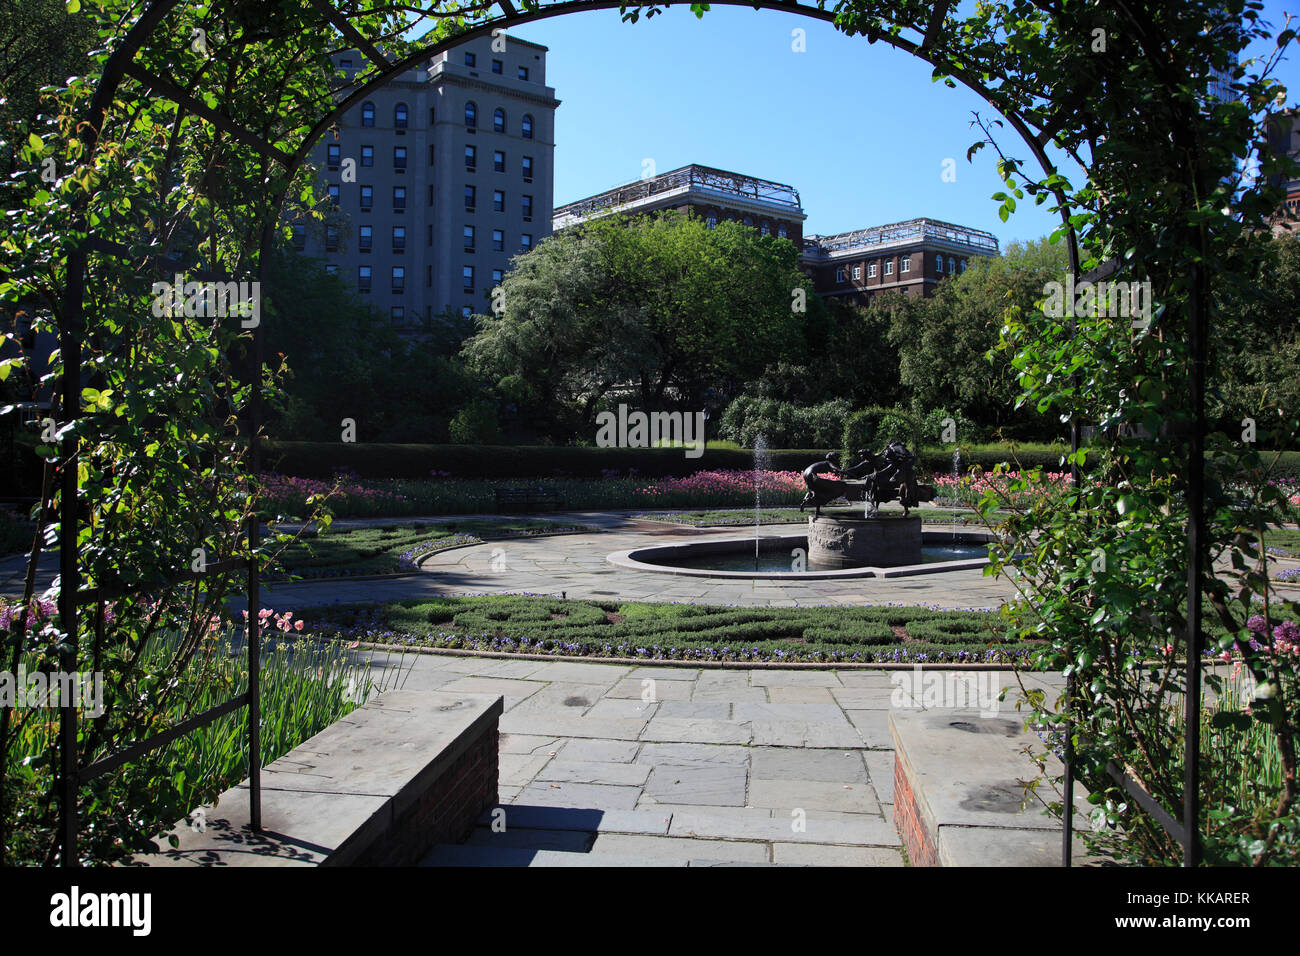 Conservatory Garden, Central Park, Manhattan, New York City, United States of America, North America Stock Photo